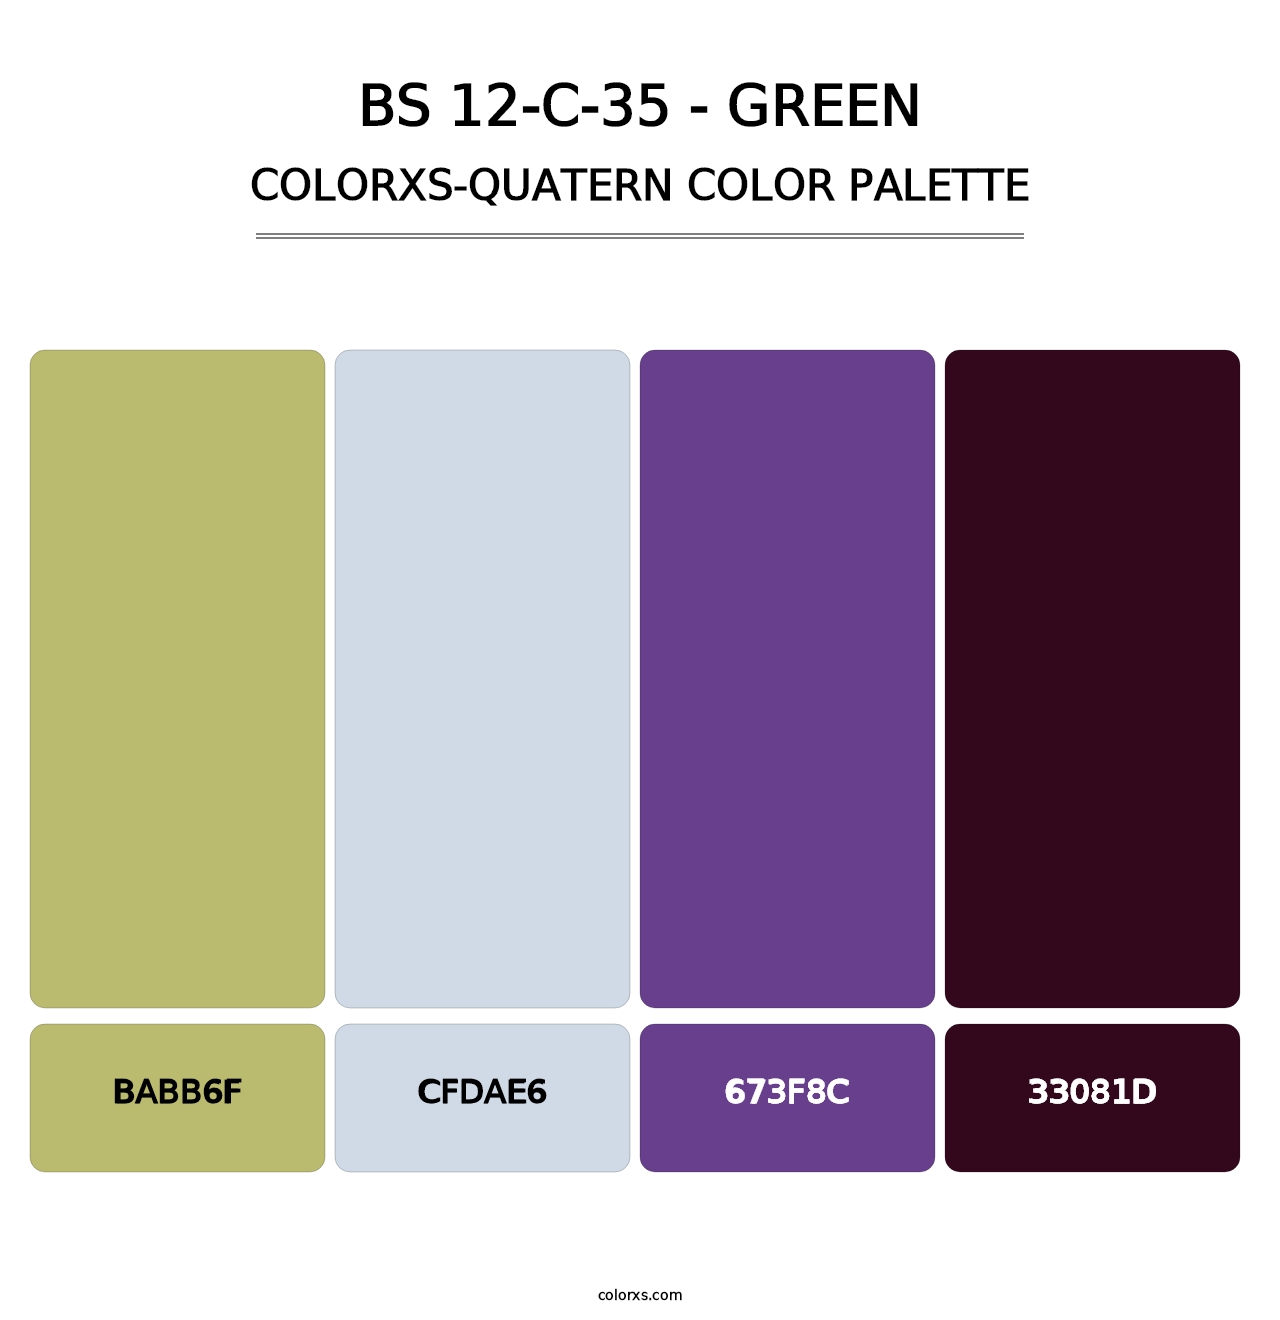 BS 12-C-35 - Green - Colorxs Quatern Palette